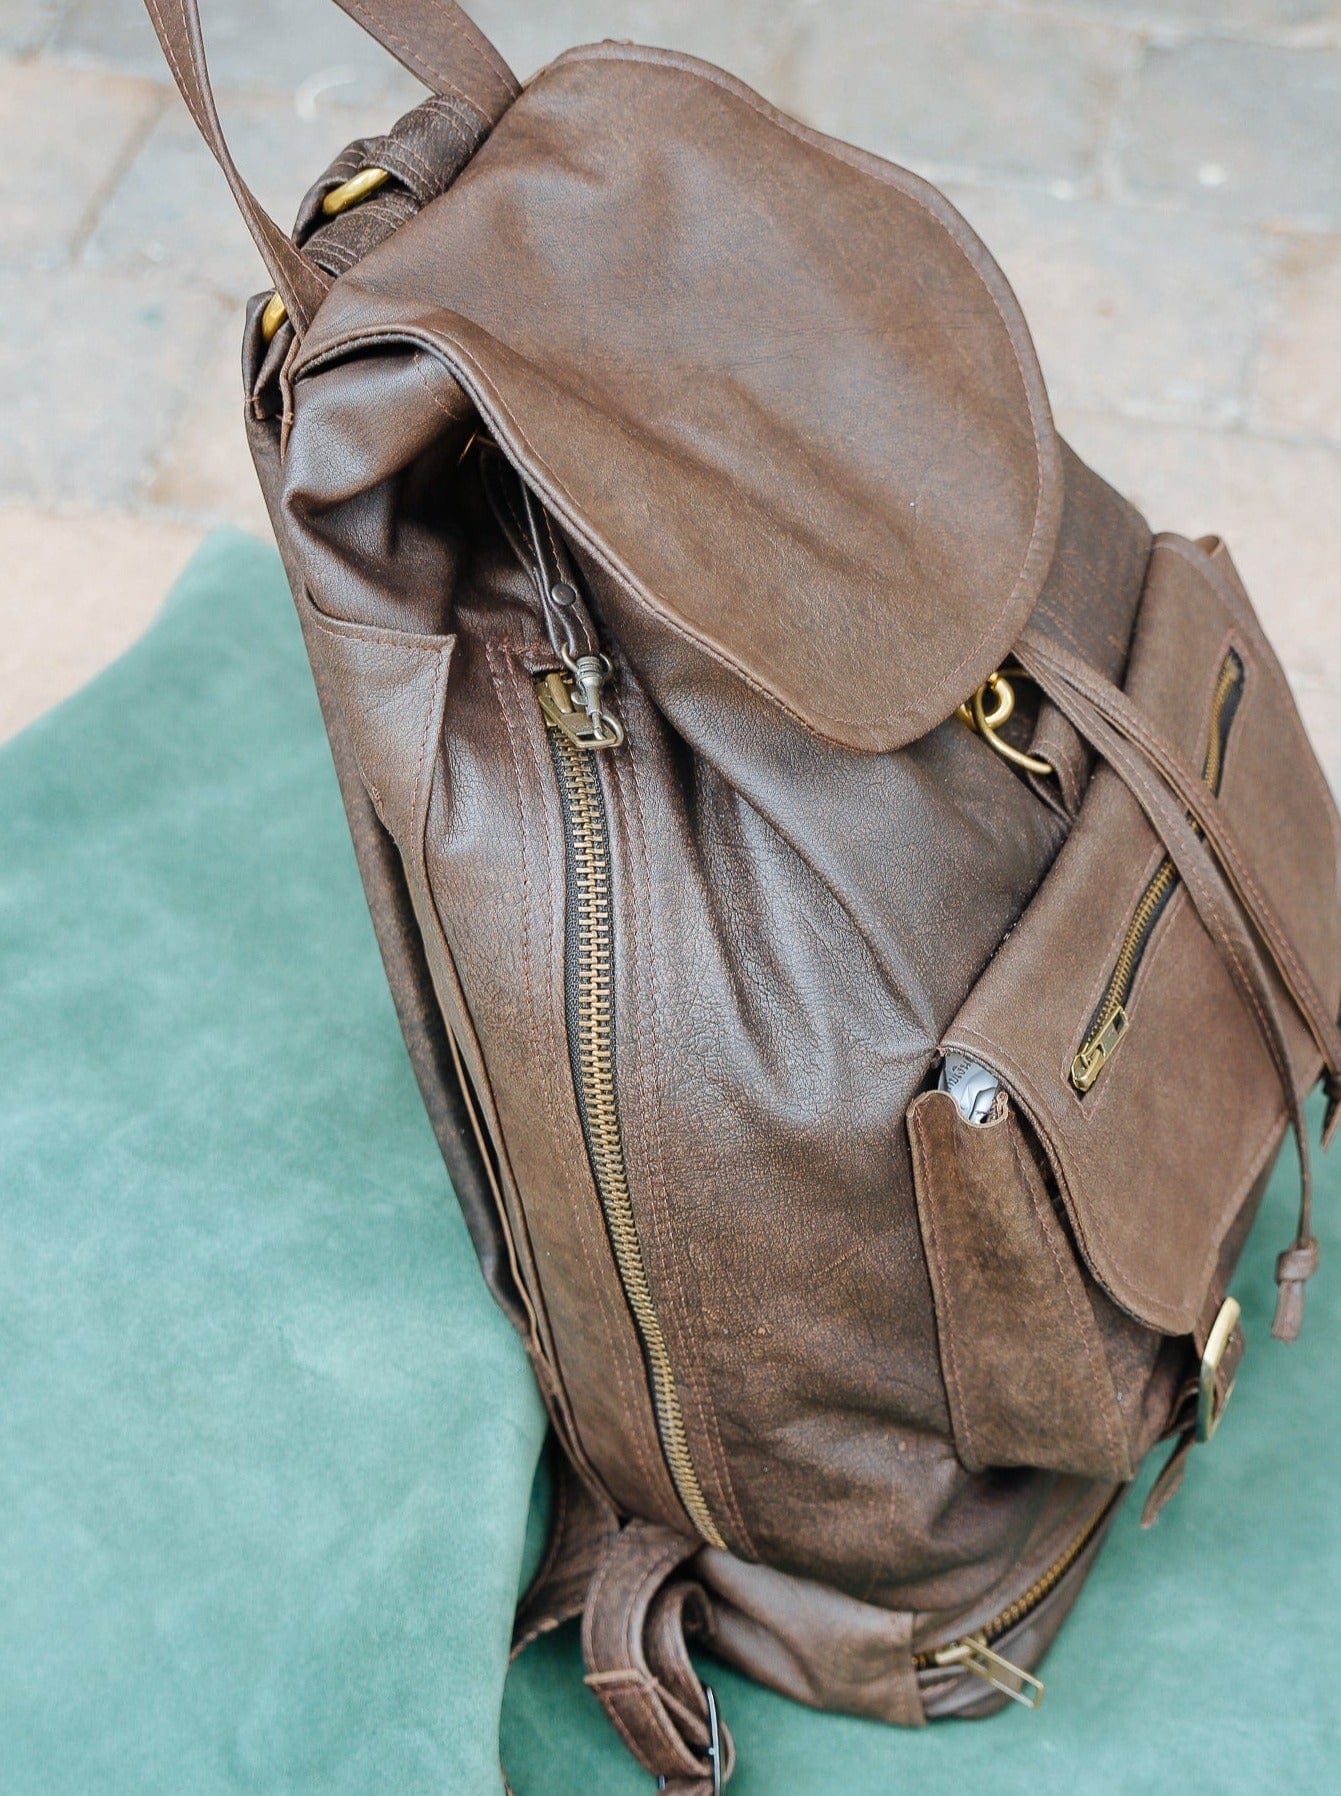 The Real McCaul Back Packs Large Deluxe Travel Laptop Backpack - Kangaroo Australian Made Australian Owned Leather Laptop/Travel Backpack Handmade in Australia- Kangaroo & Cowhide Leather